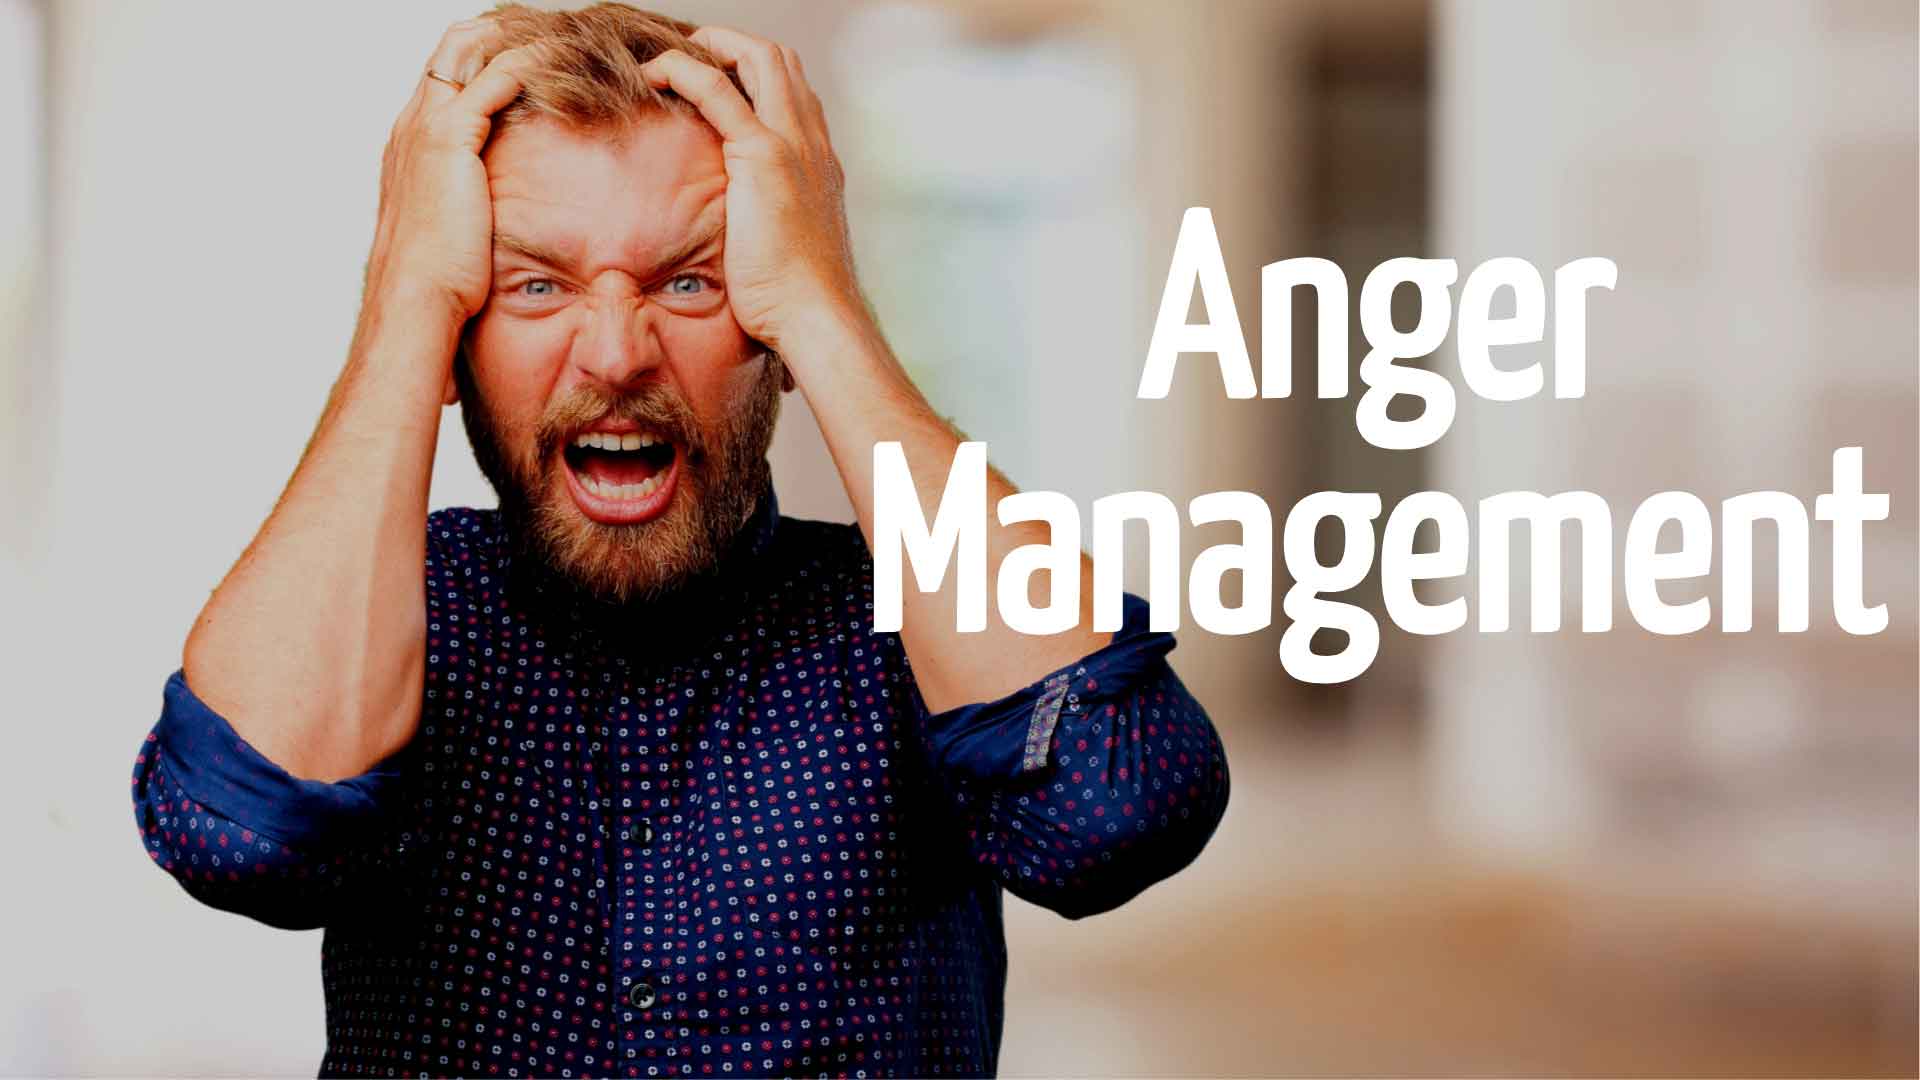 anger management in nagpur,,anger management treatment,anger management doctor in nagpur